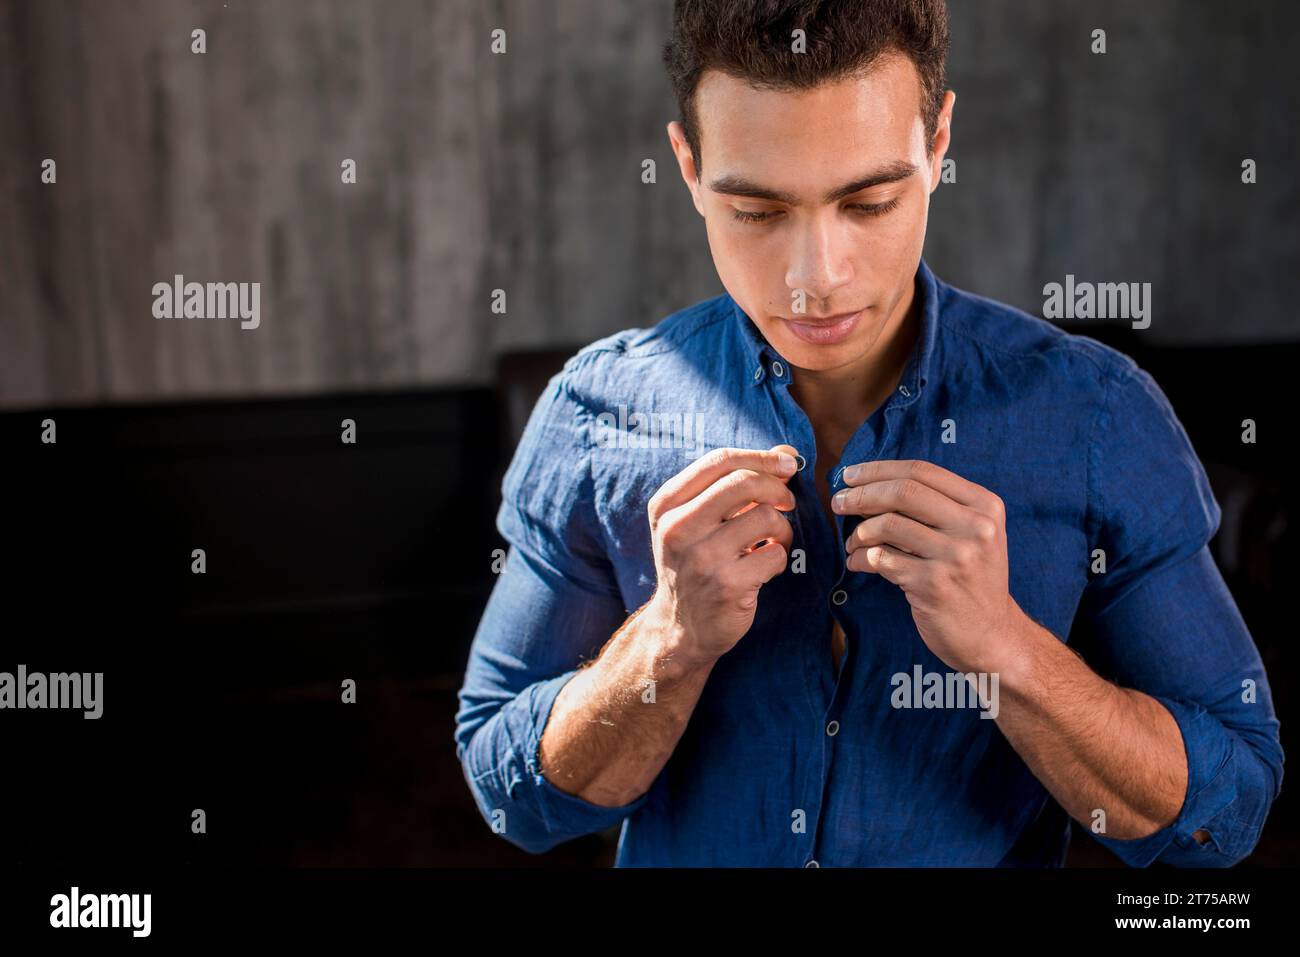 Portrait man buttoning his blue shirt Stock Photo